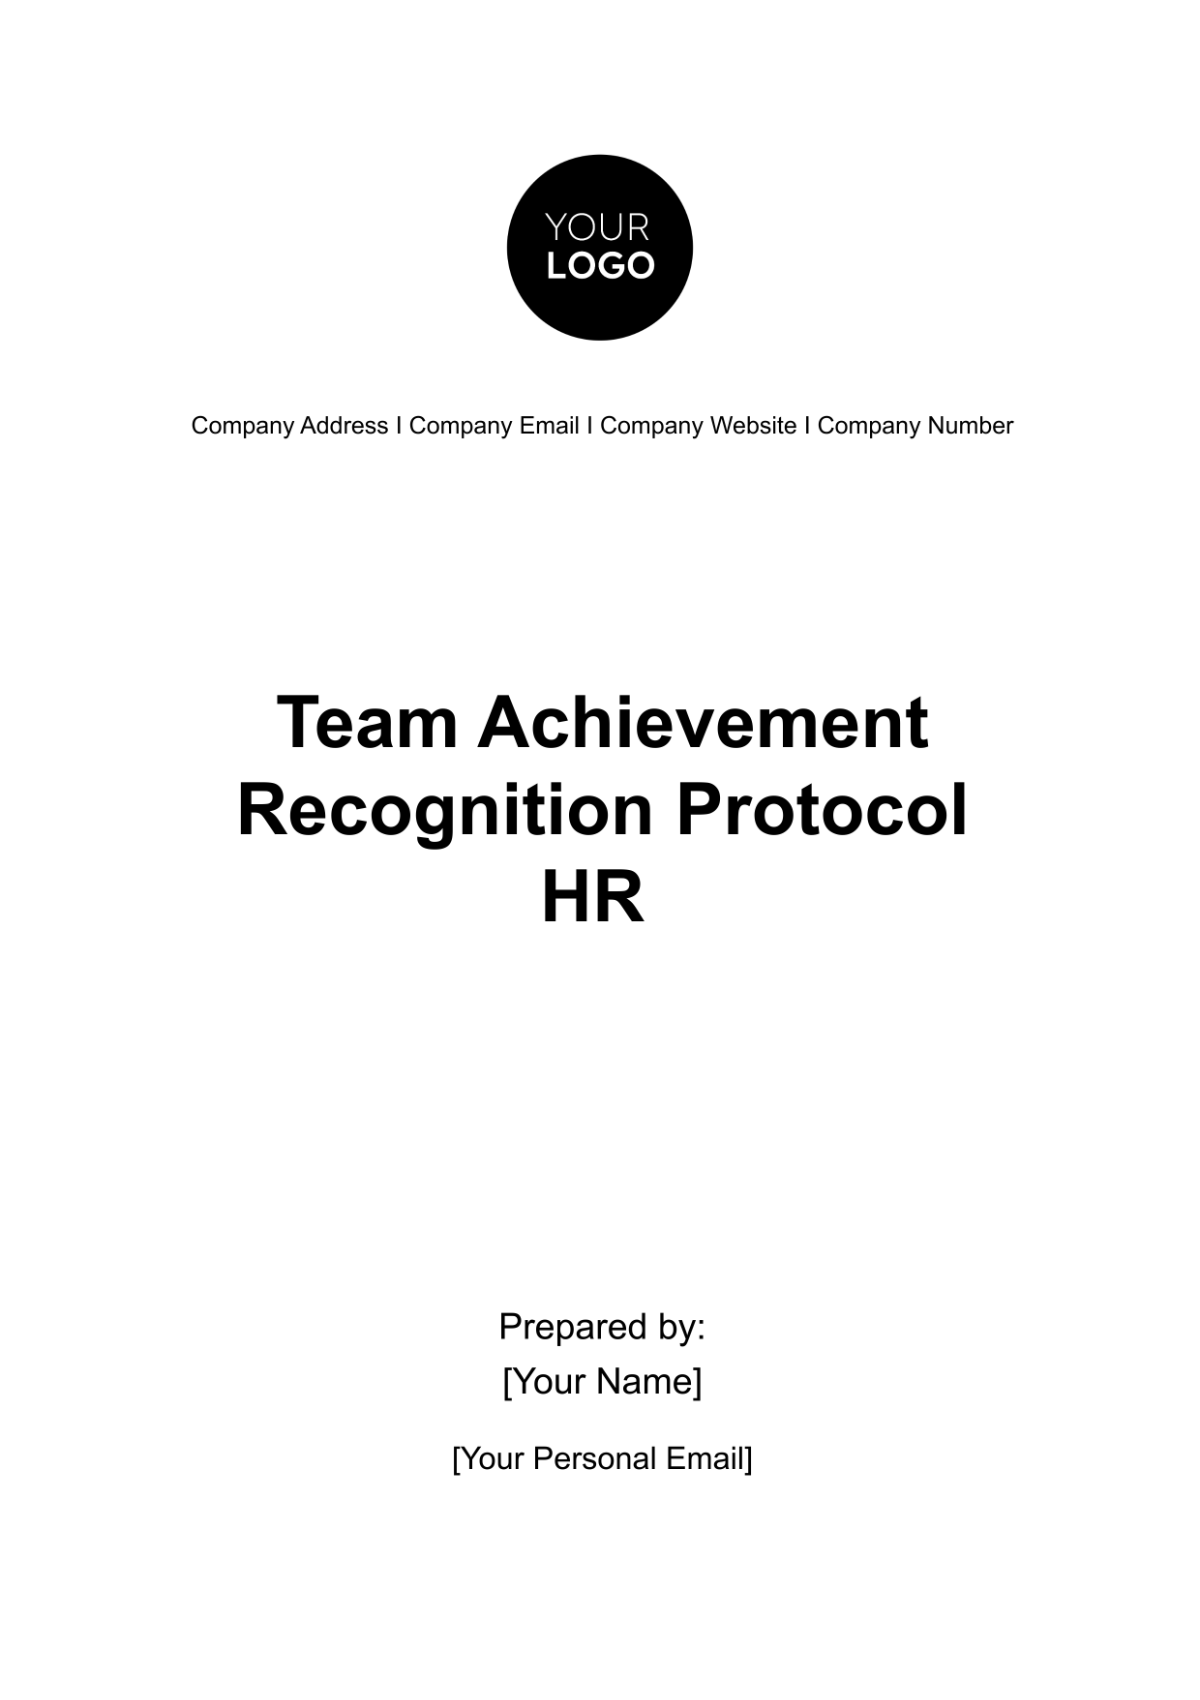 Free Team Achievement Recognition Protocol HR Template